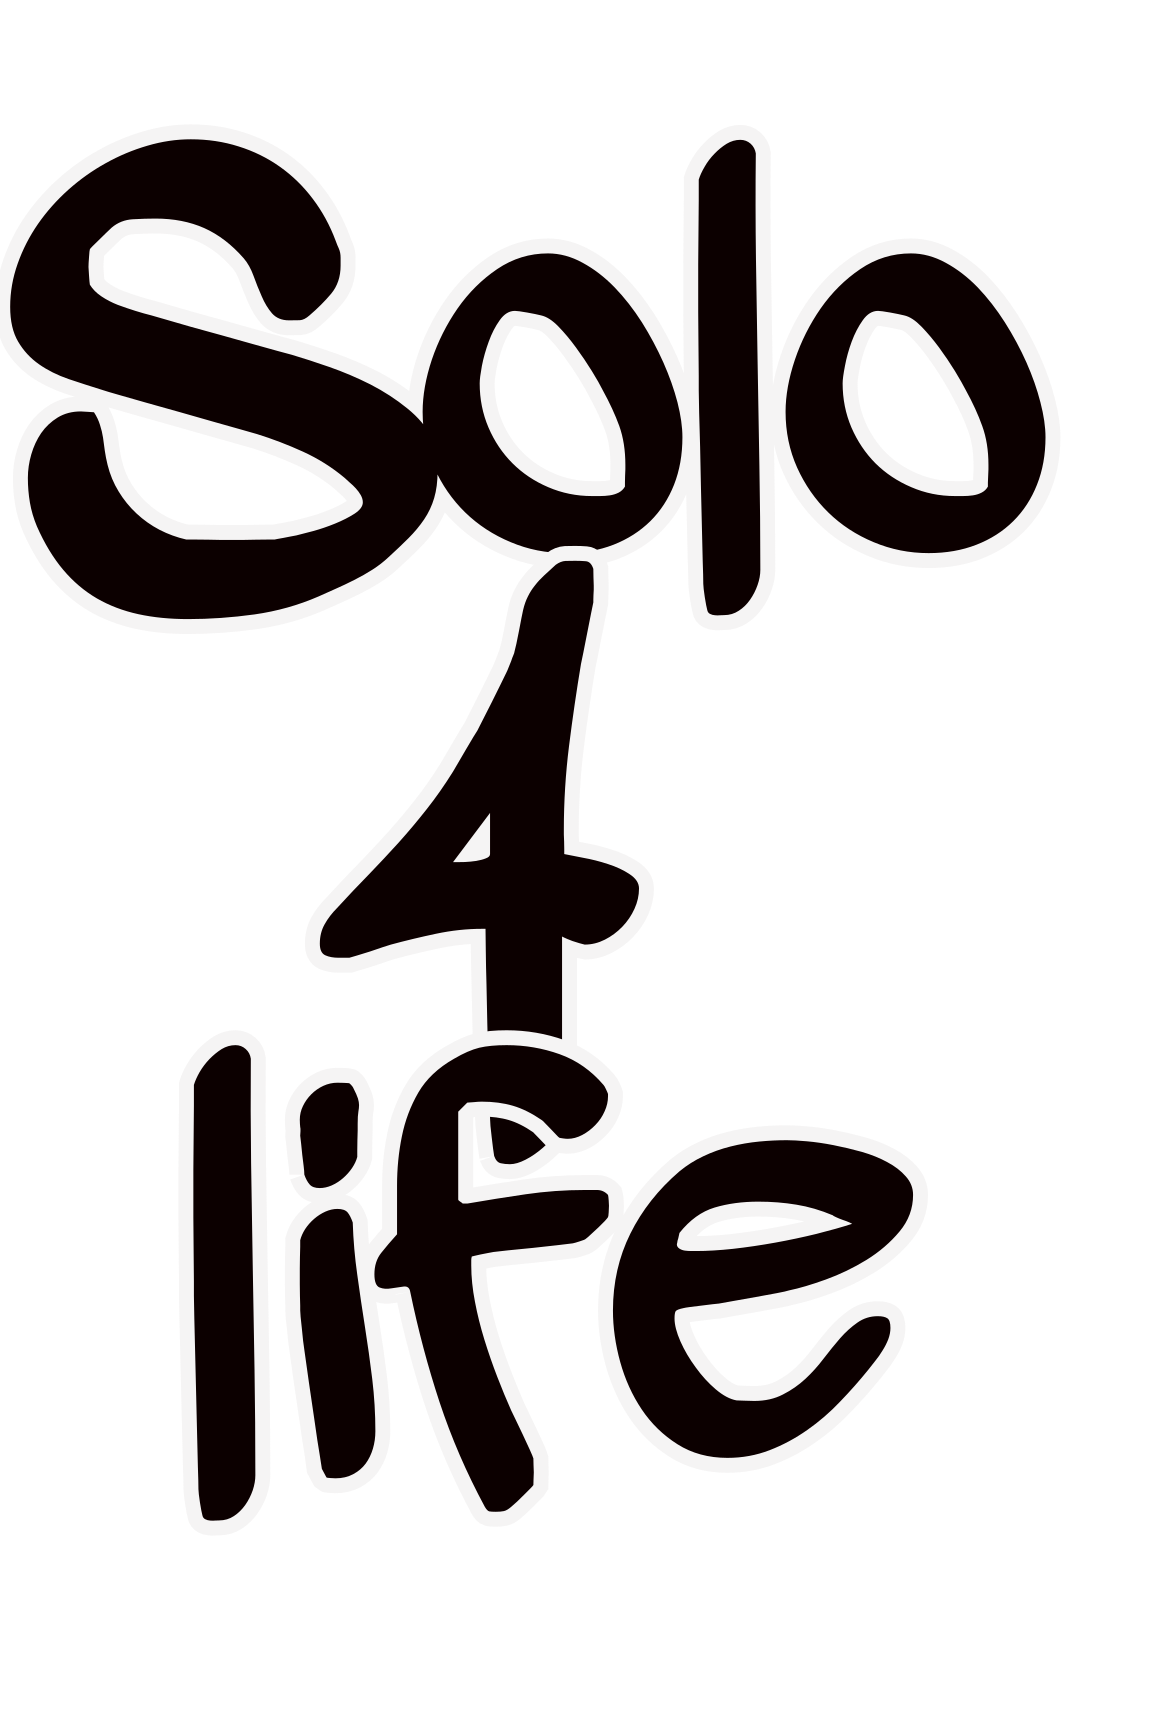 Solo 4 Life Tee